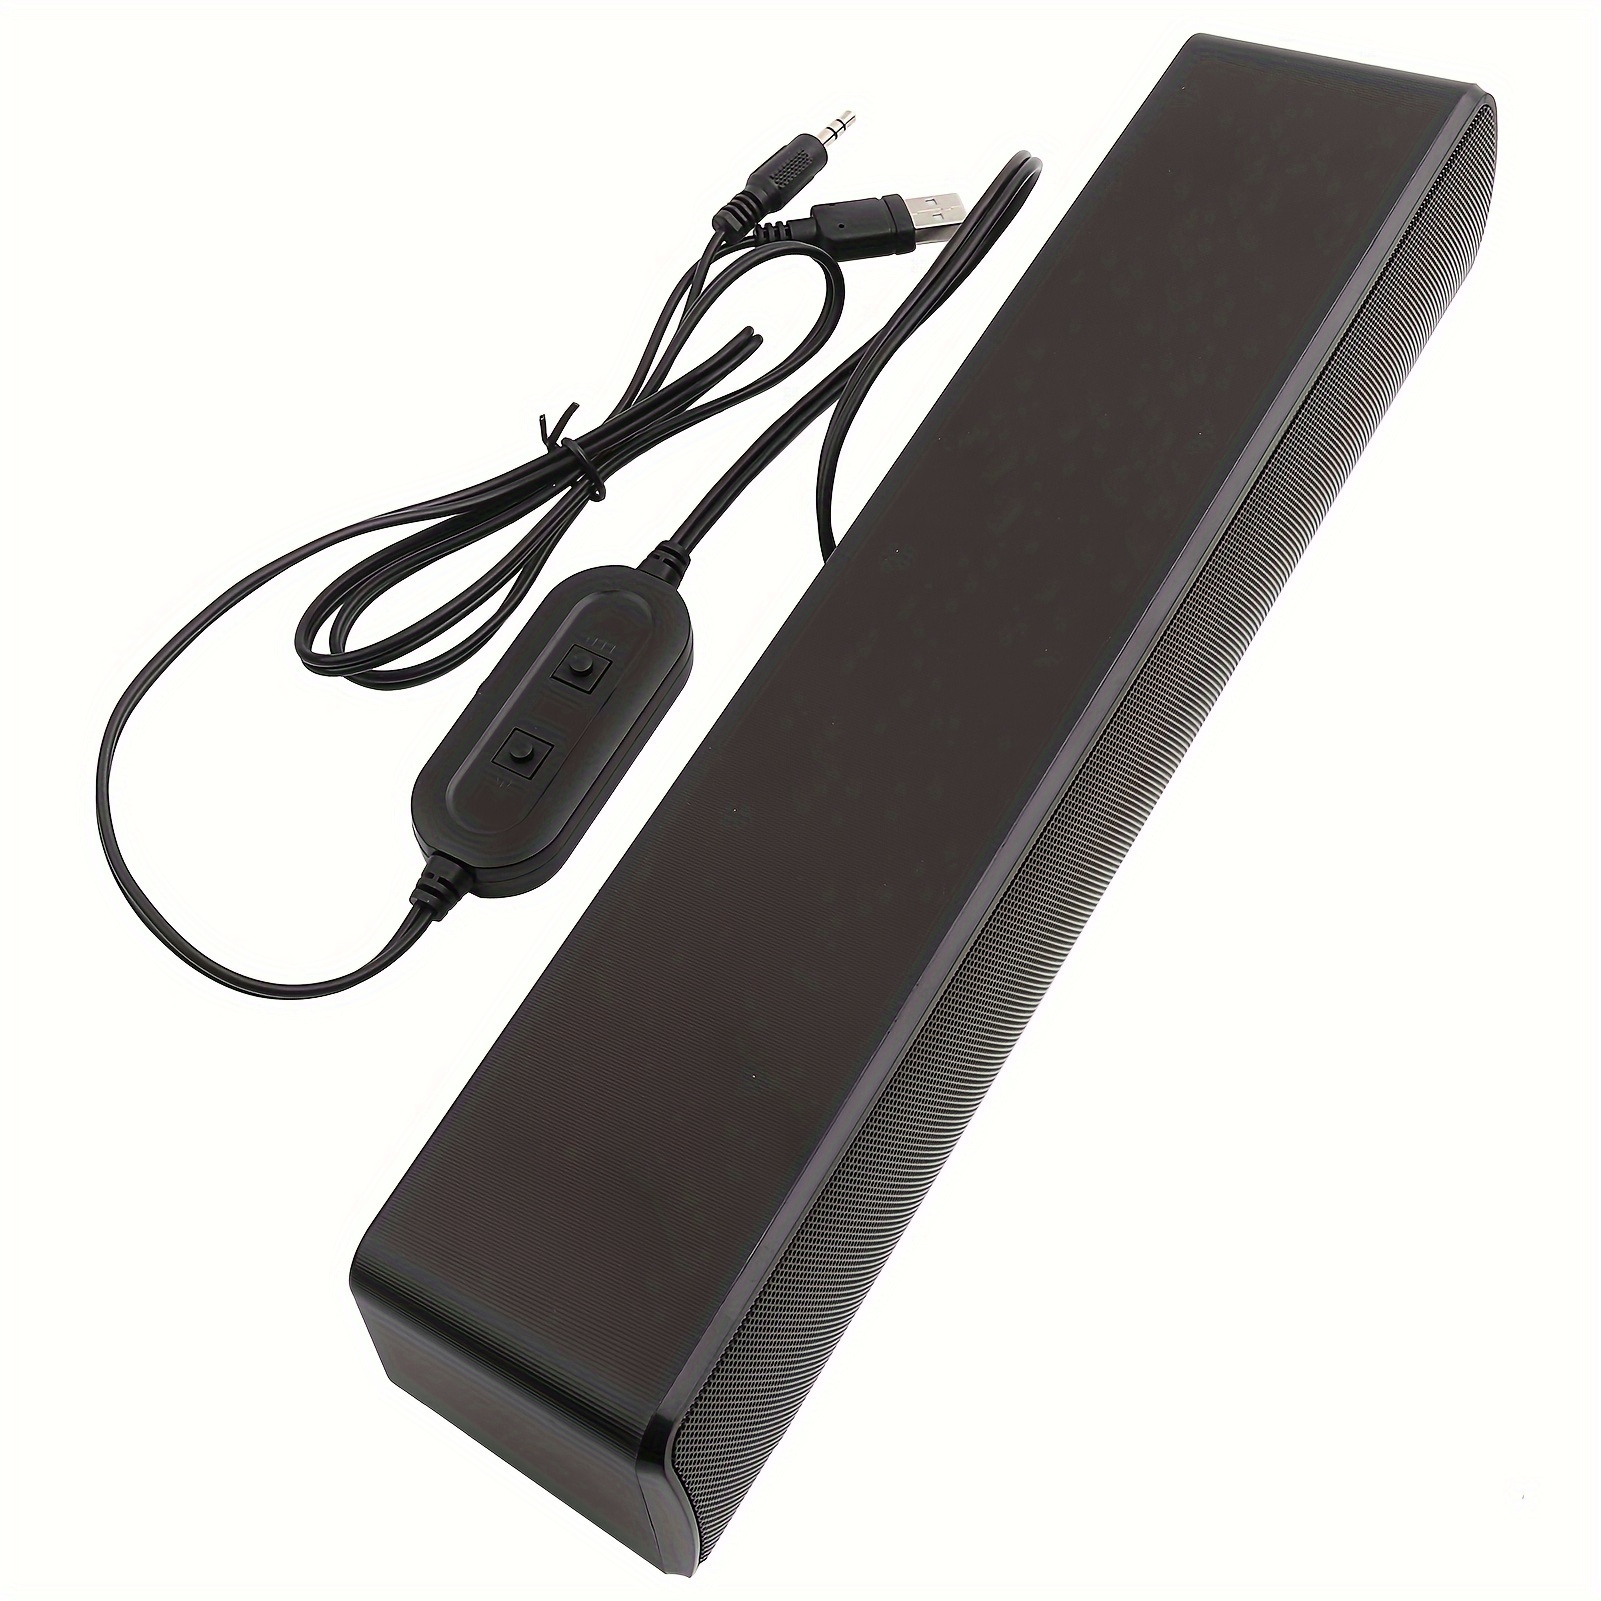 

Pc Soundbar, Plastic Usb Wired Stereo Soundbar Music Player Bass Surround Sound Box With 3.5mm Input For Desktop Laptop Tablet Pc Smartphones, 12.6 X 2.5 X 2.7inch (black)